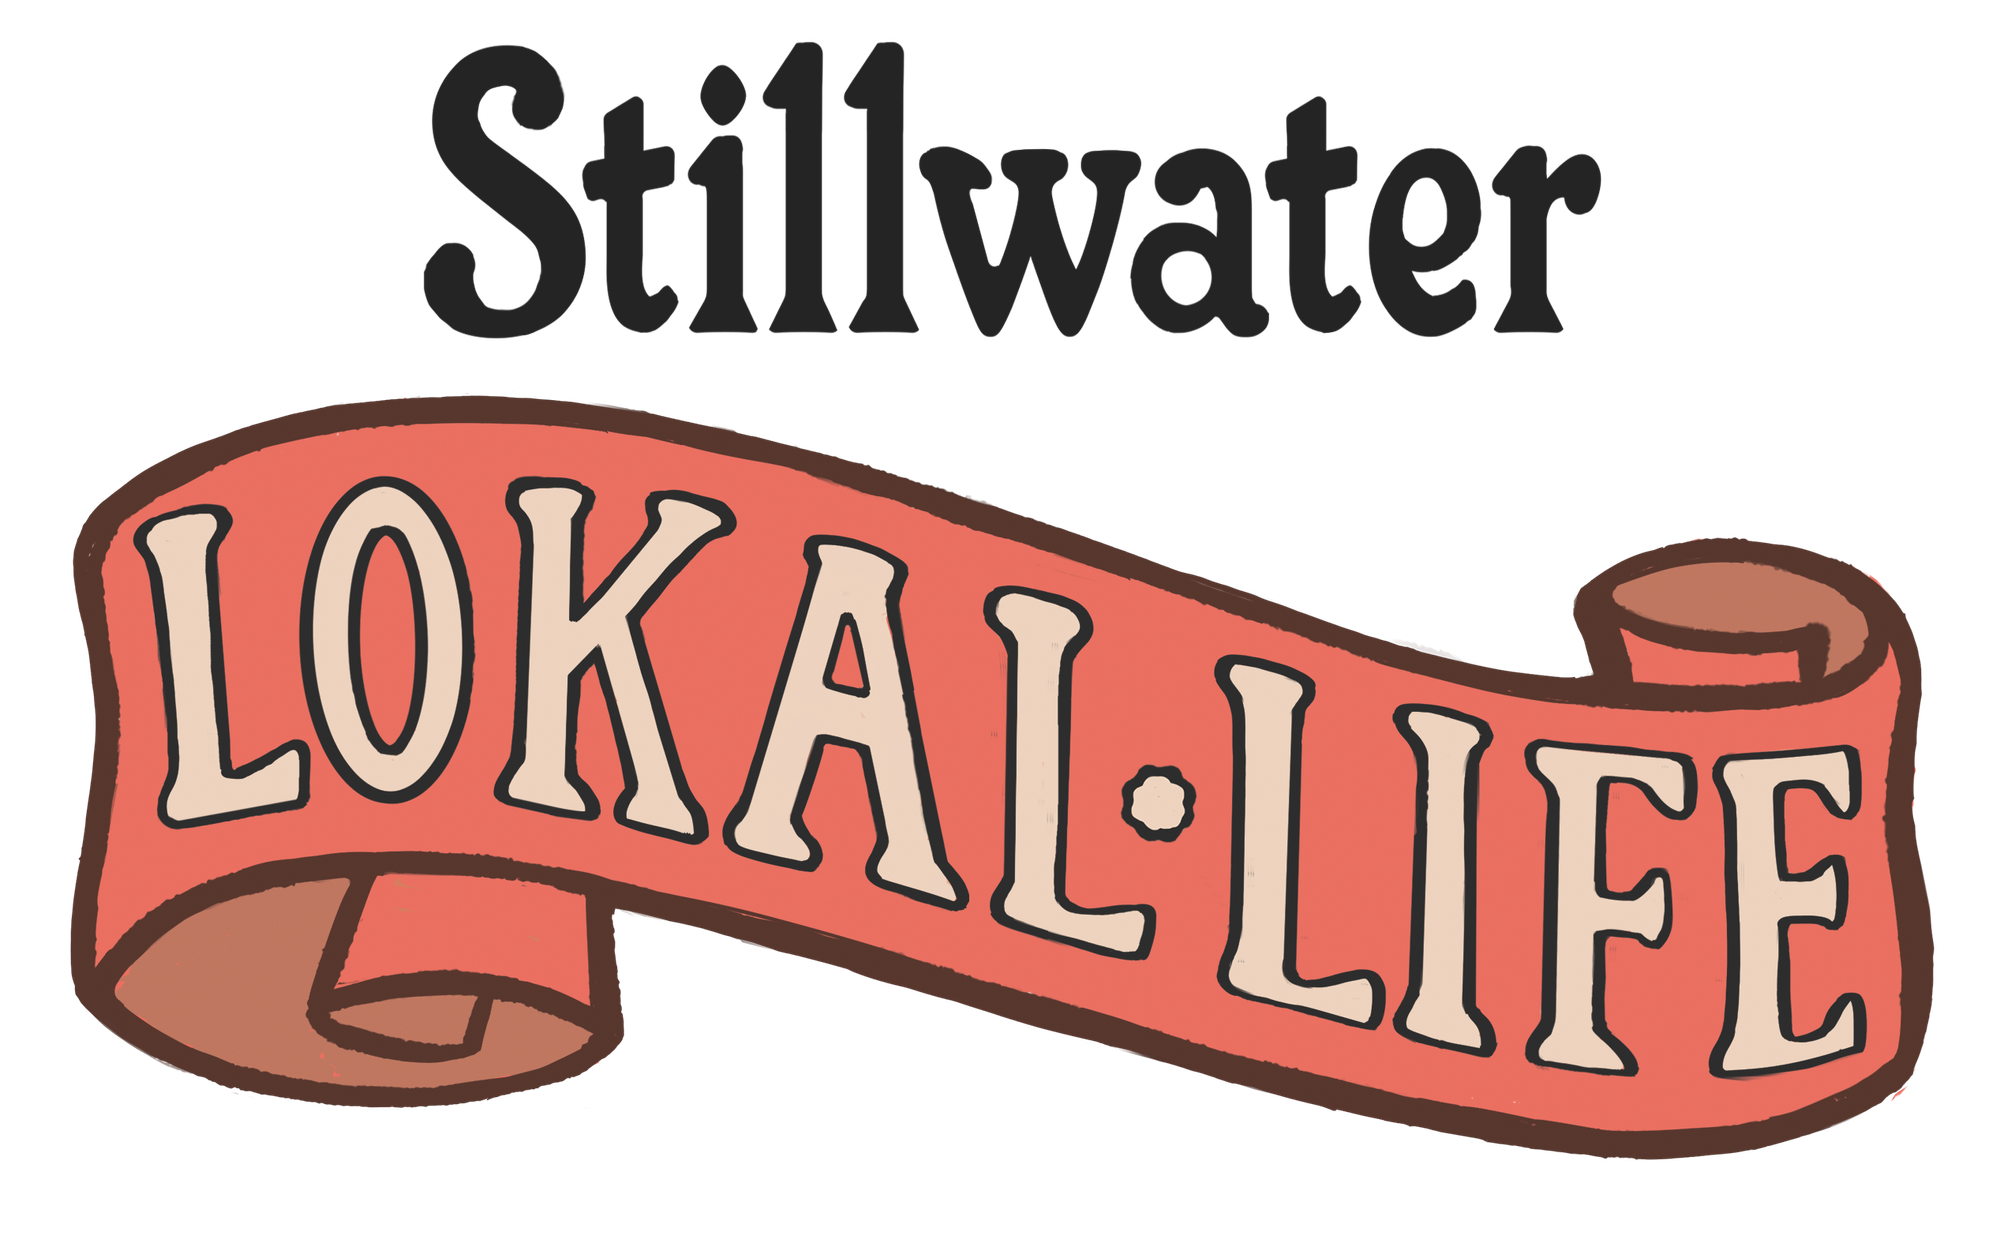 Stillwater Lokal Life